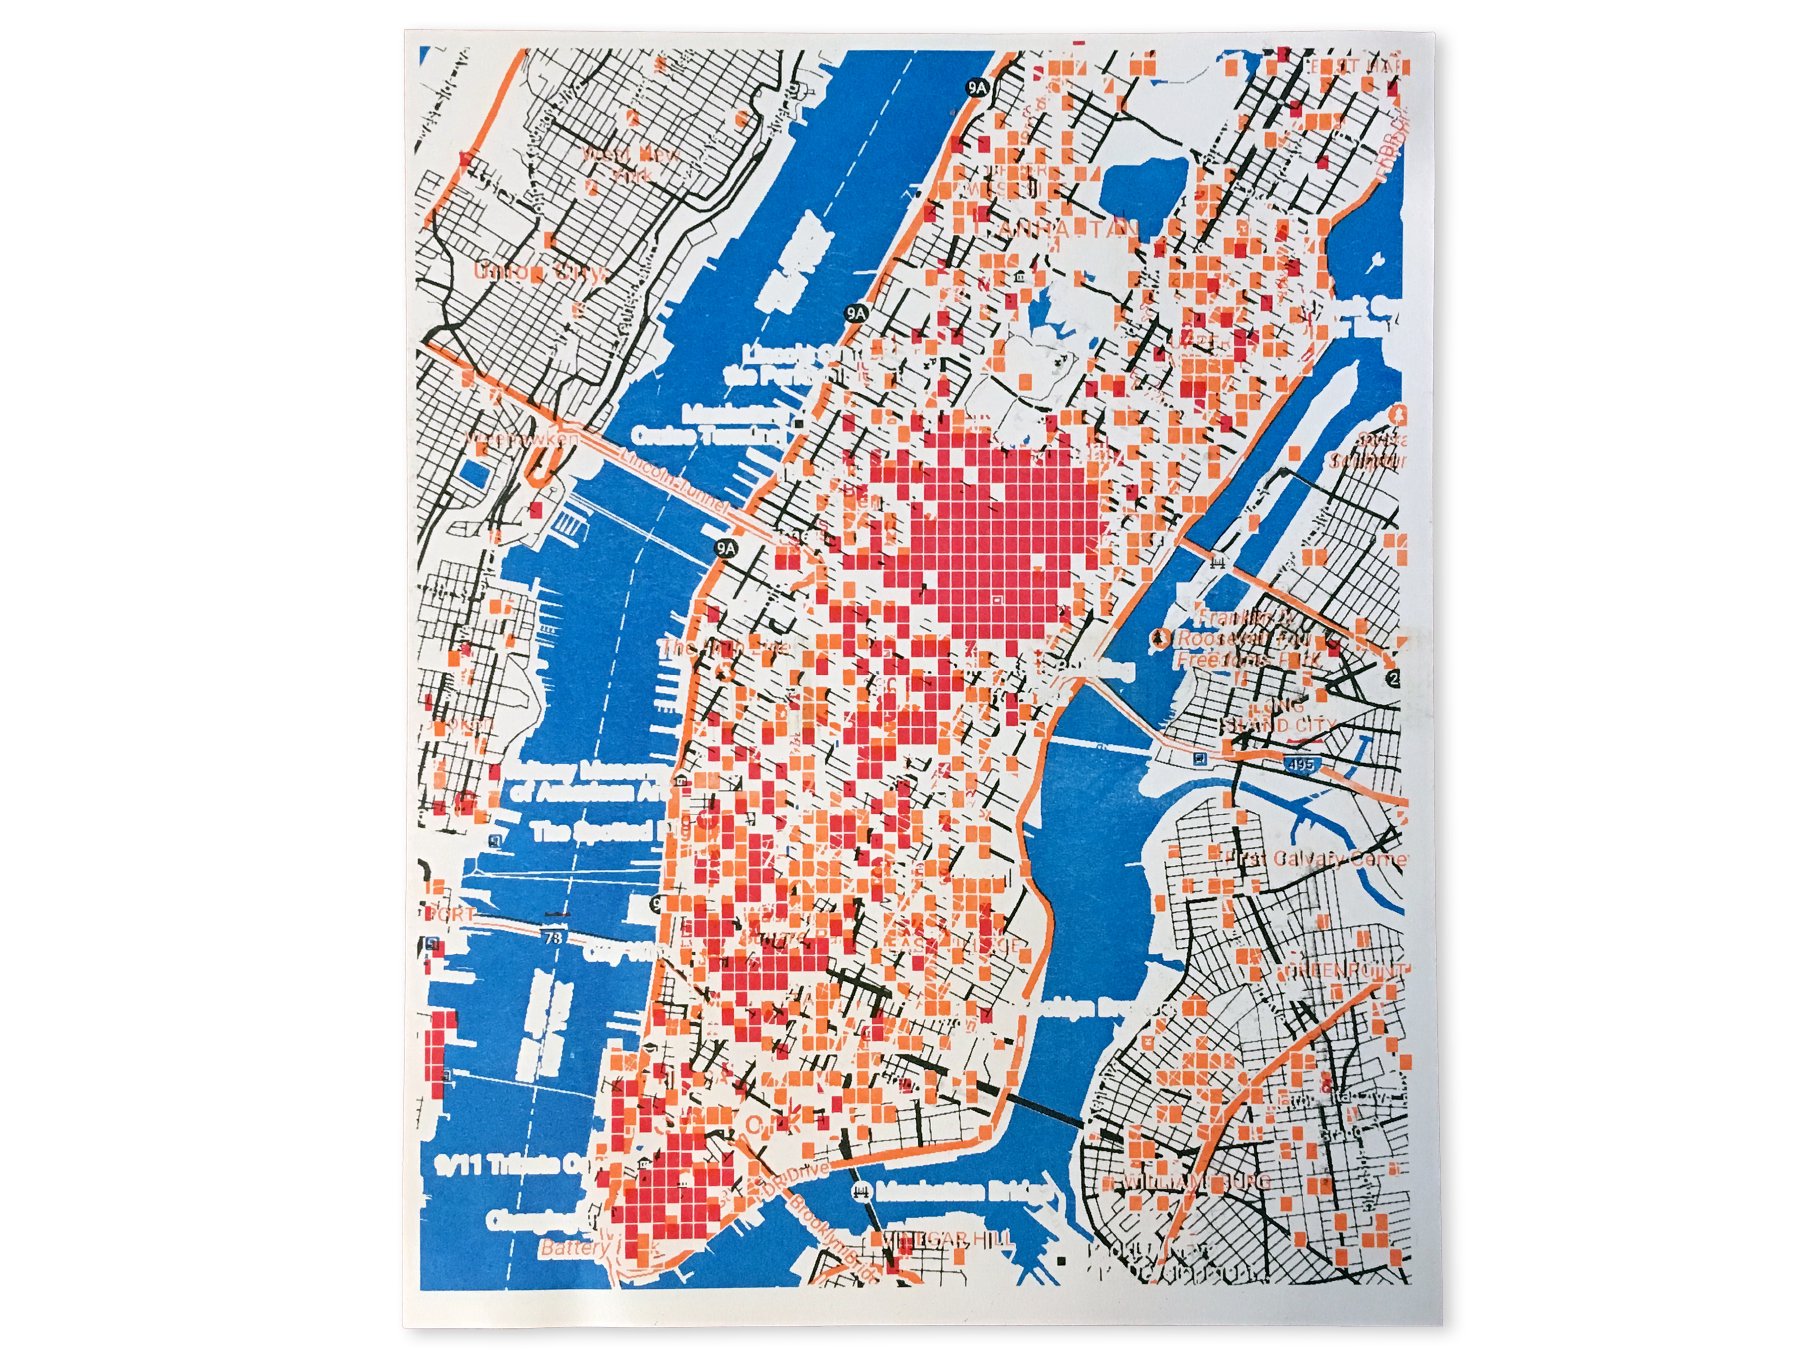 Risograph print of Manhattan